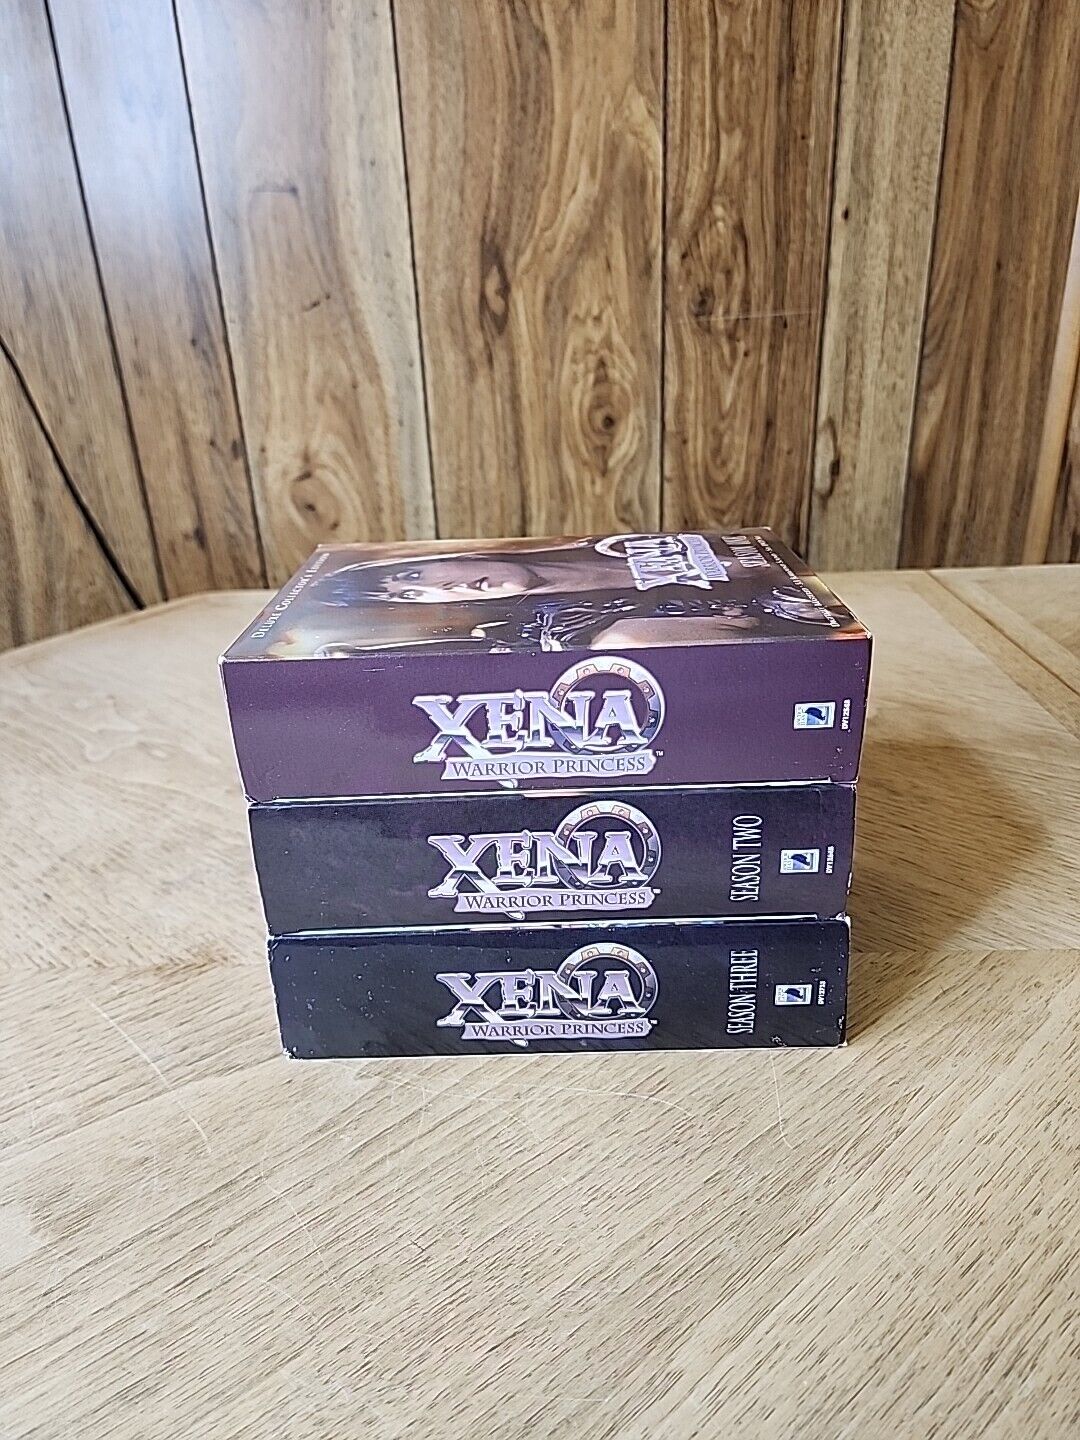 Xena Warrior Princess Deluxe Collector's Edition Seasons 1-3 Vintage DVD Set